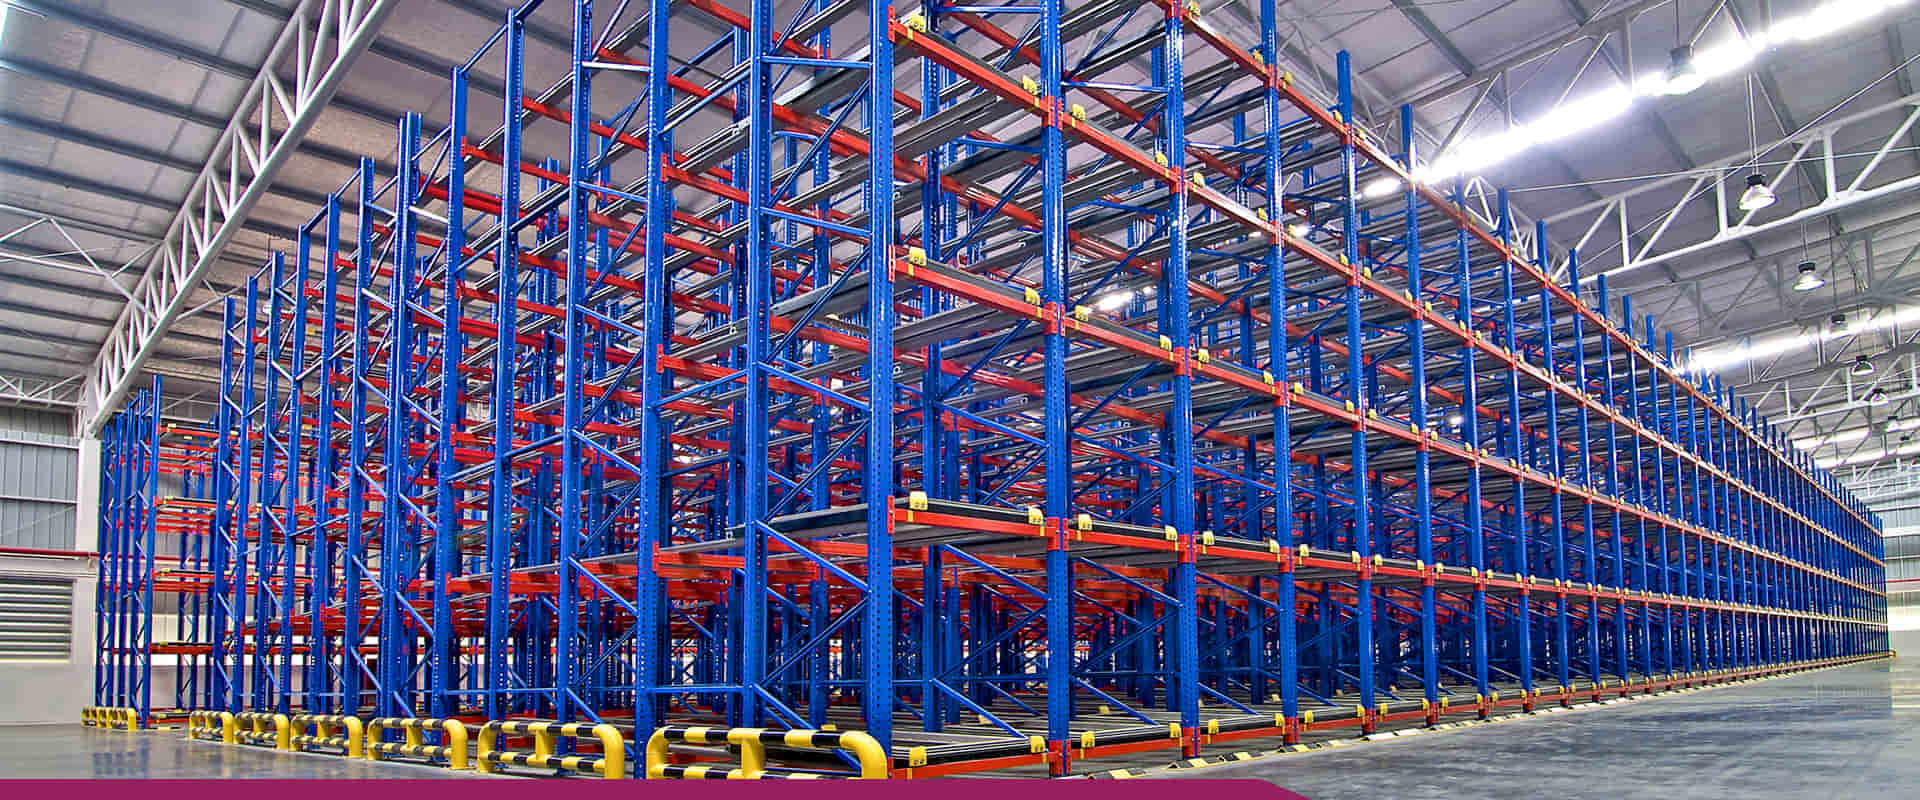 India’s Top Warehouse And Industrial Storage Racks Manufacturer In Rajokari